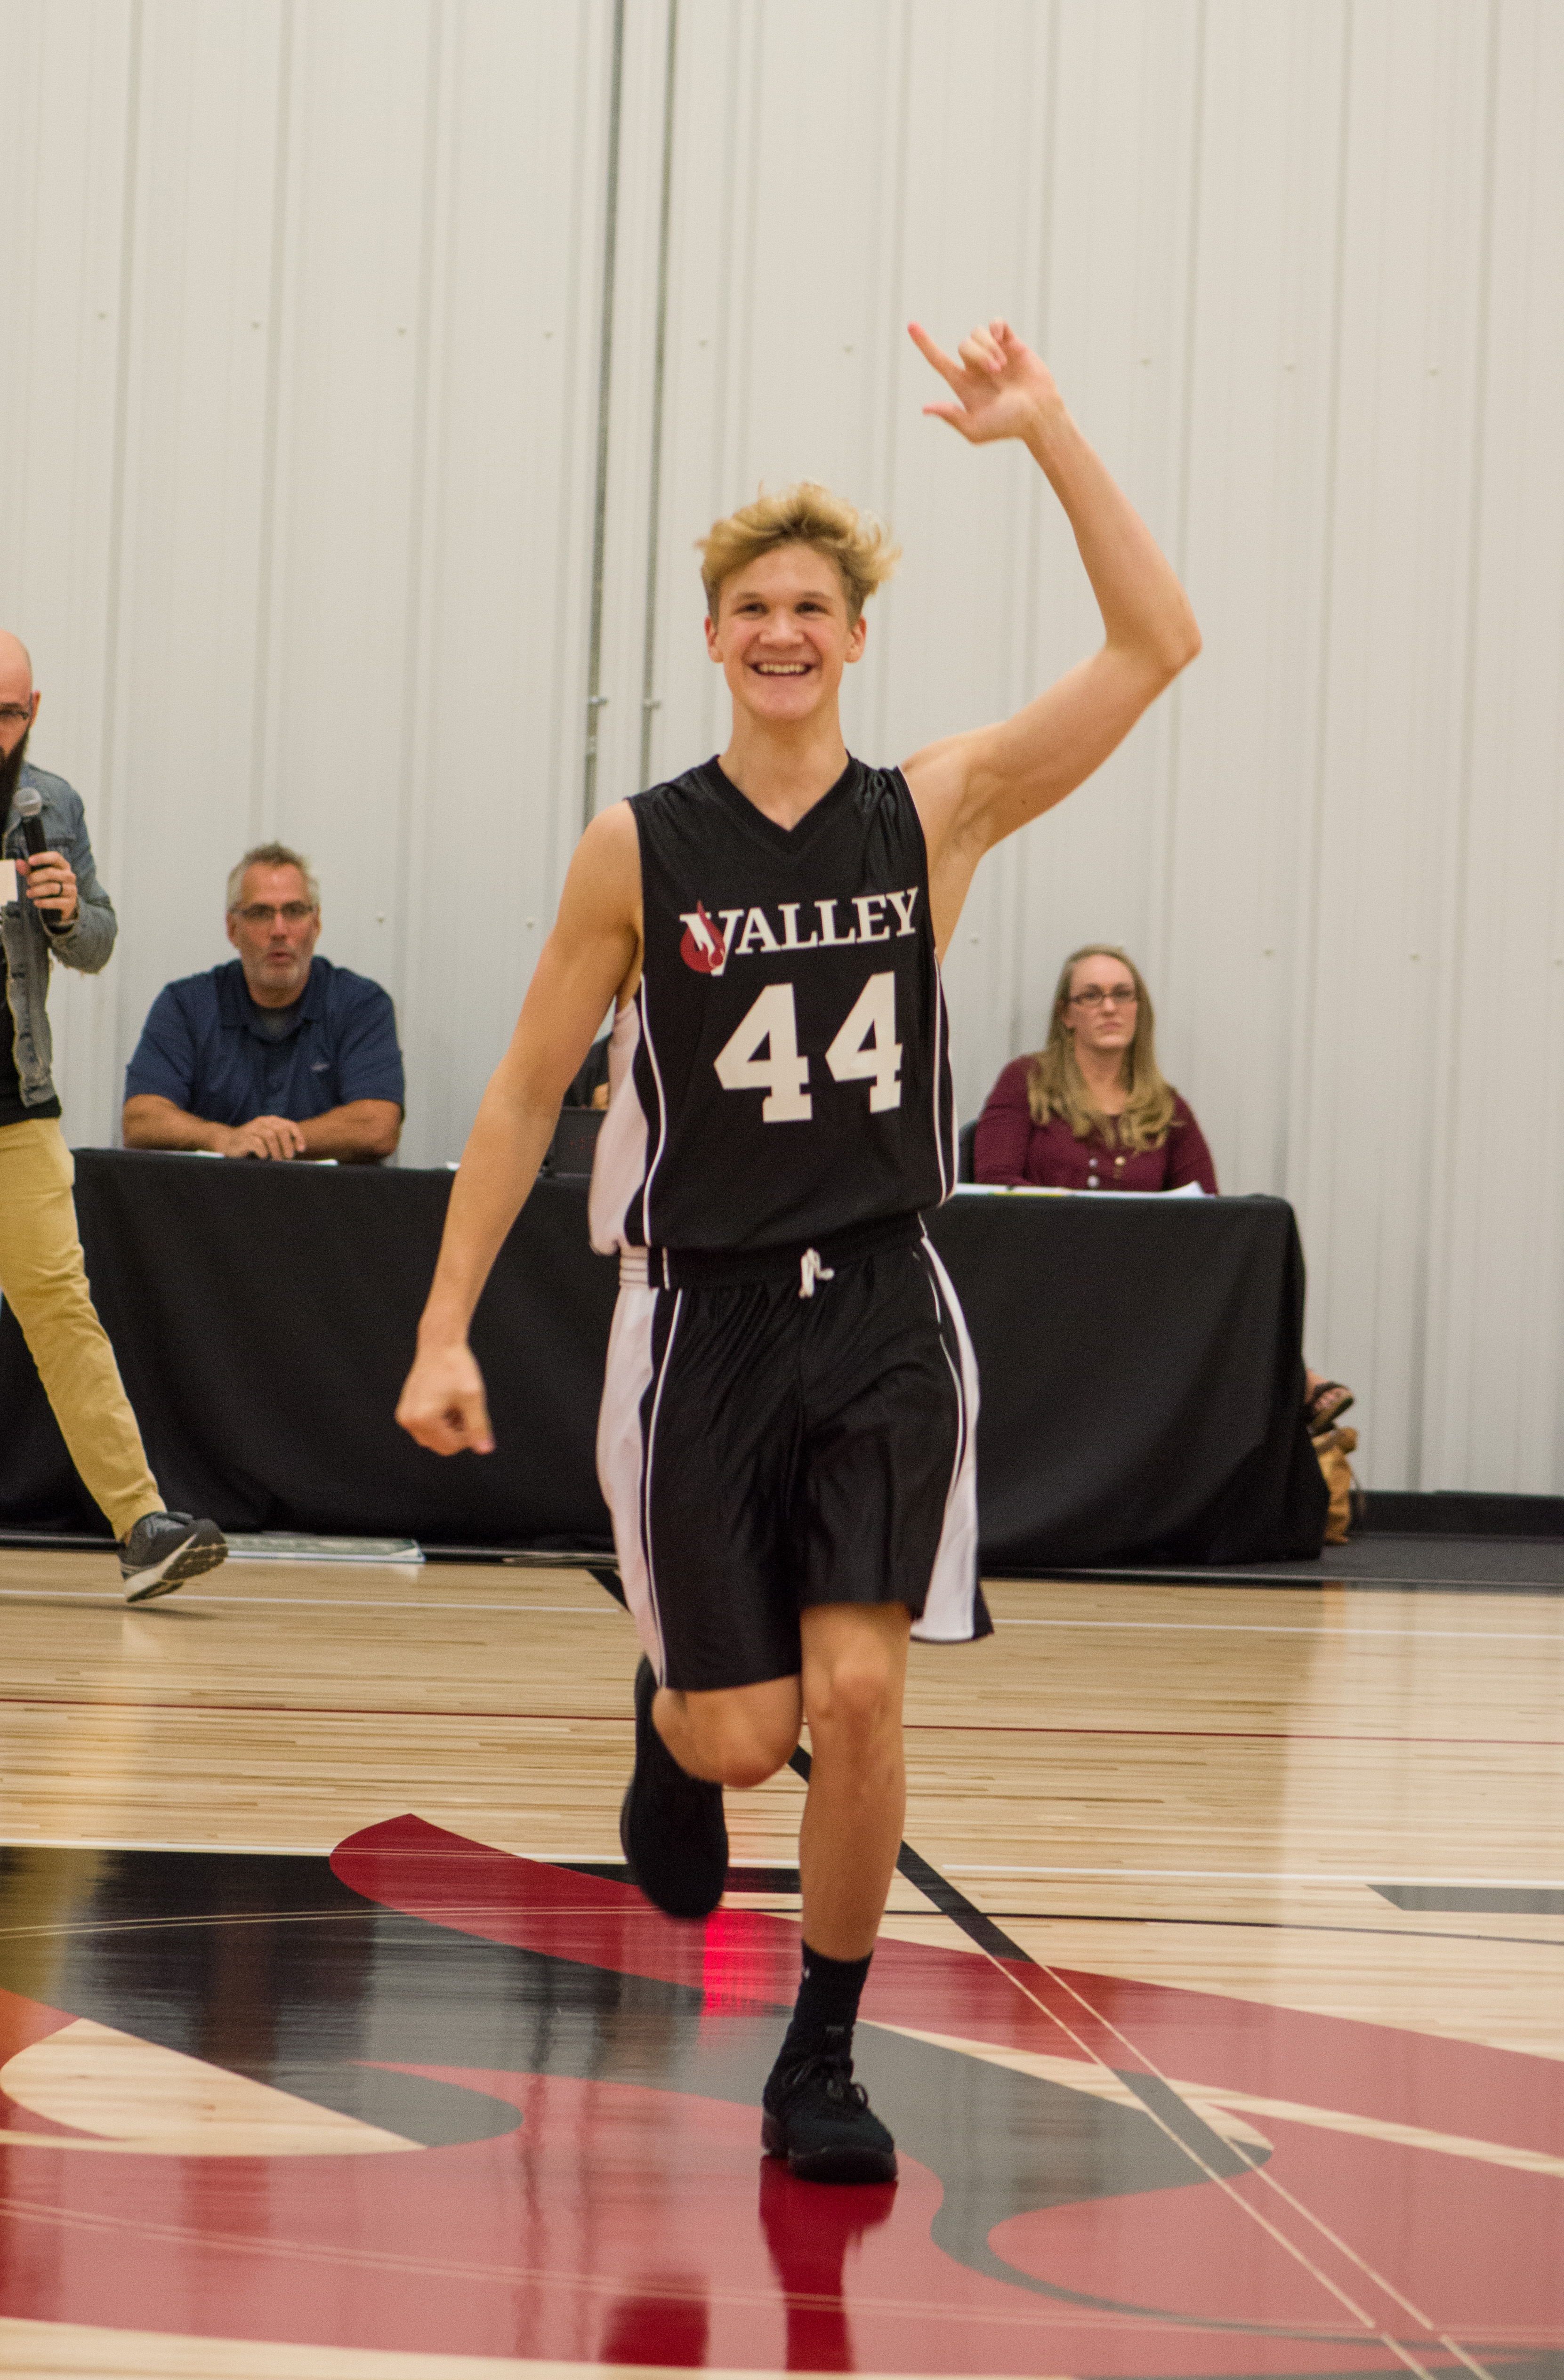 Teenage boy smiling and celebrating while playing basketball 